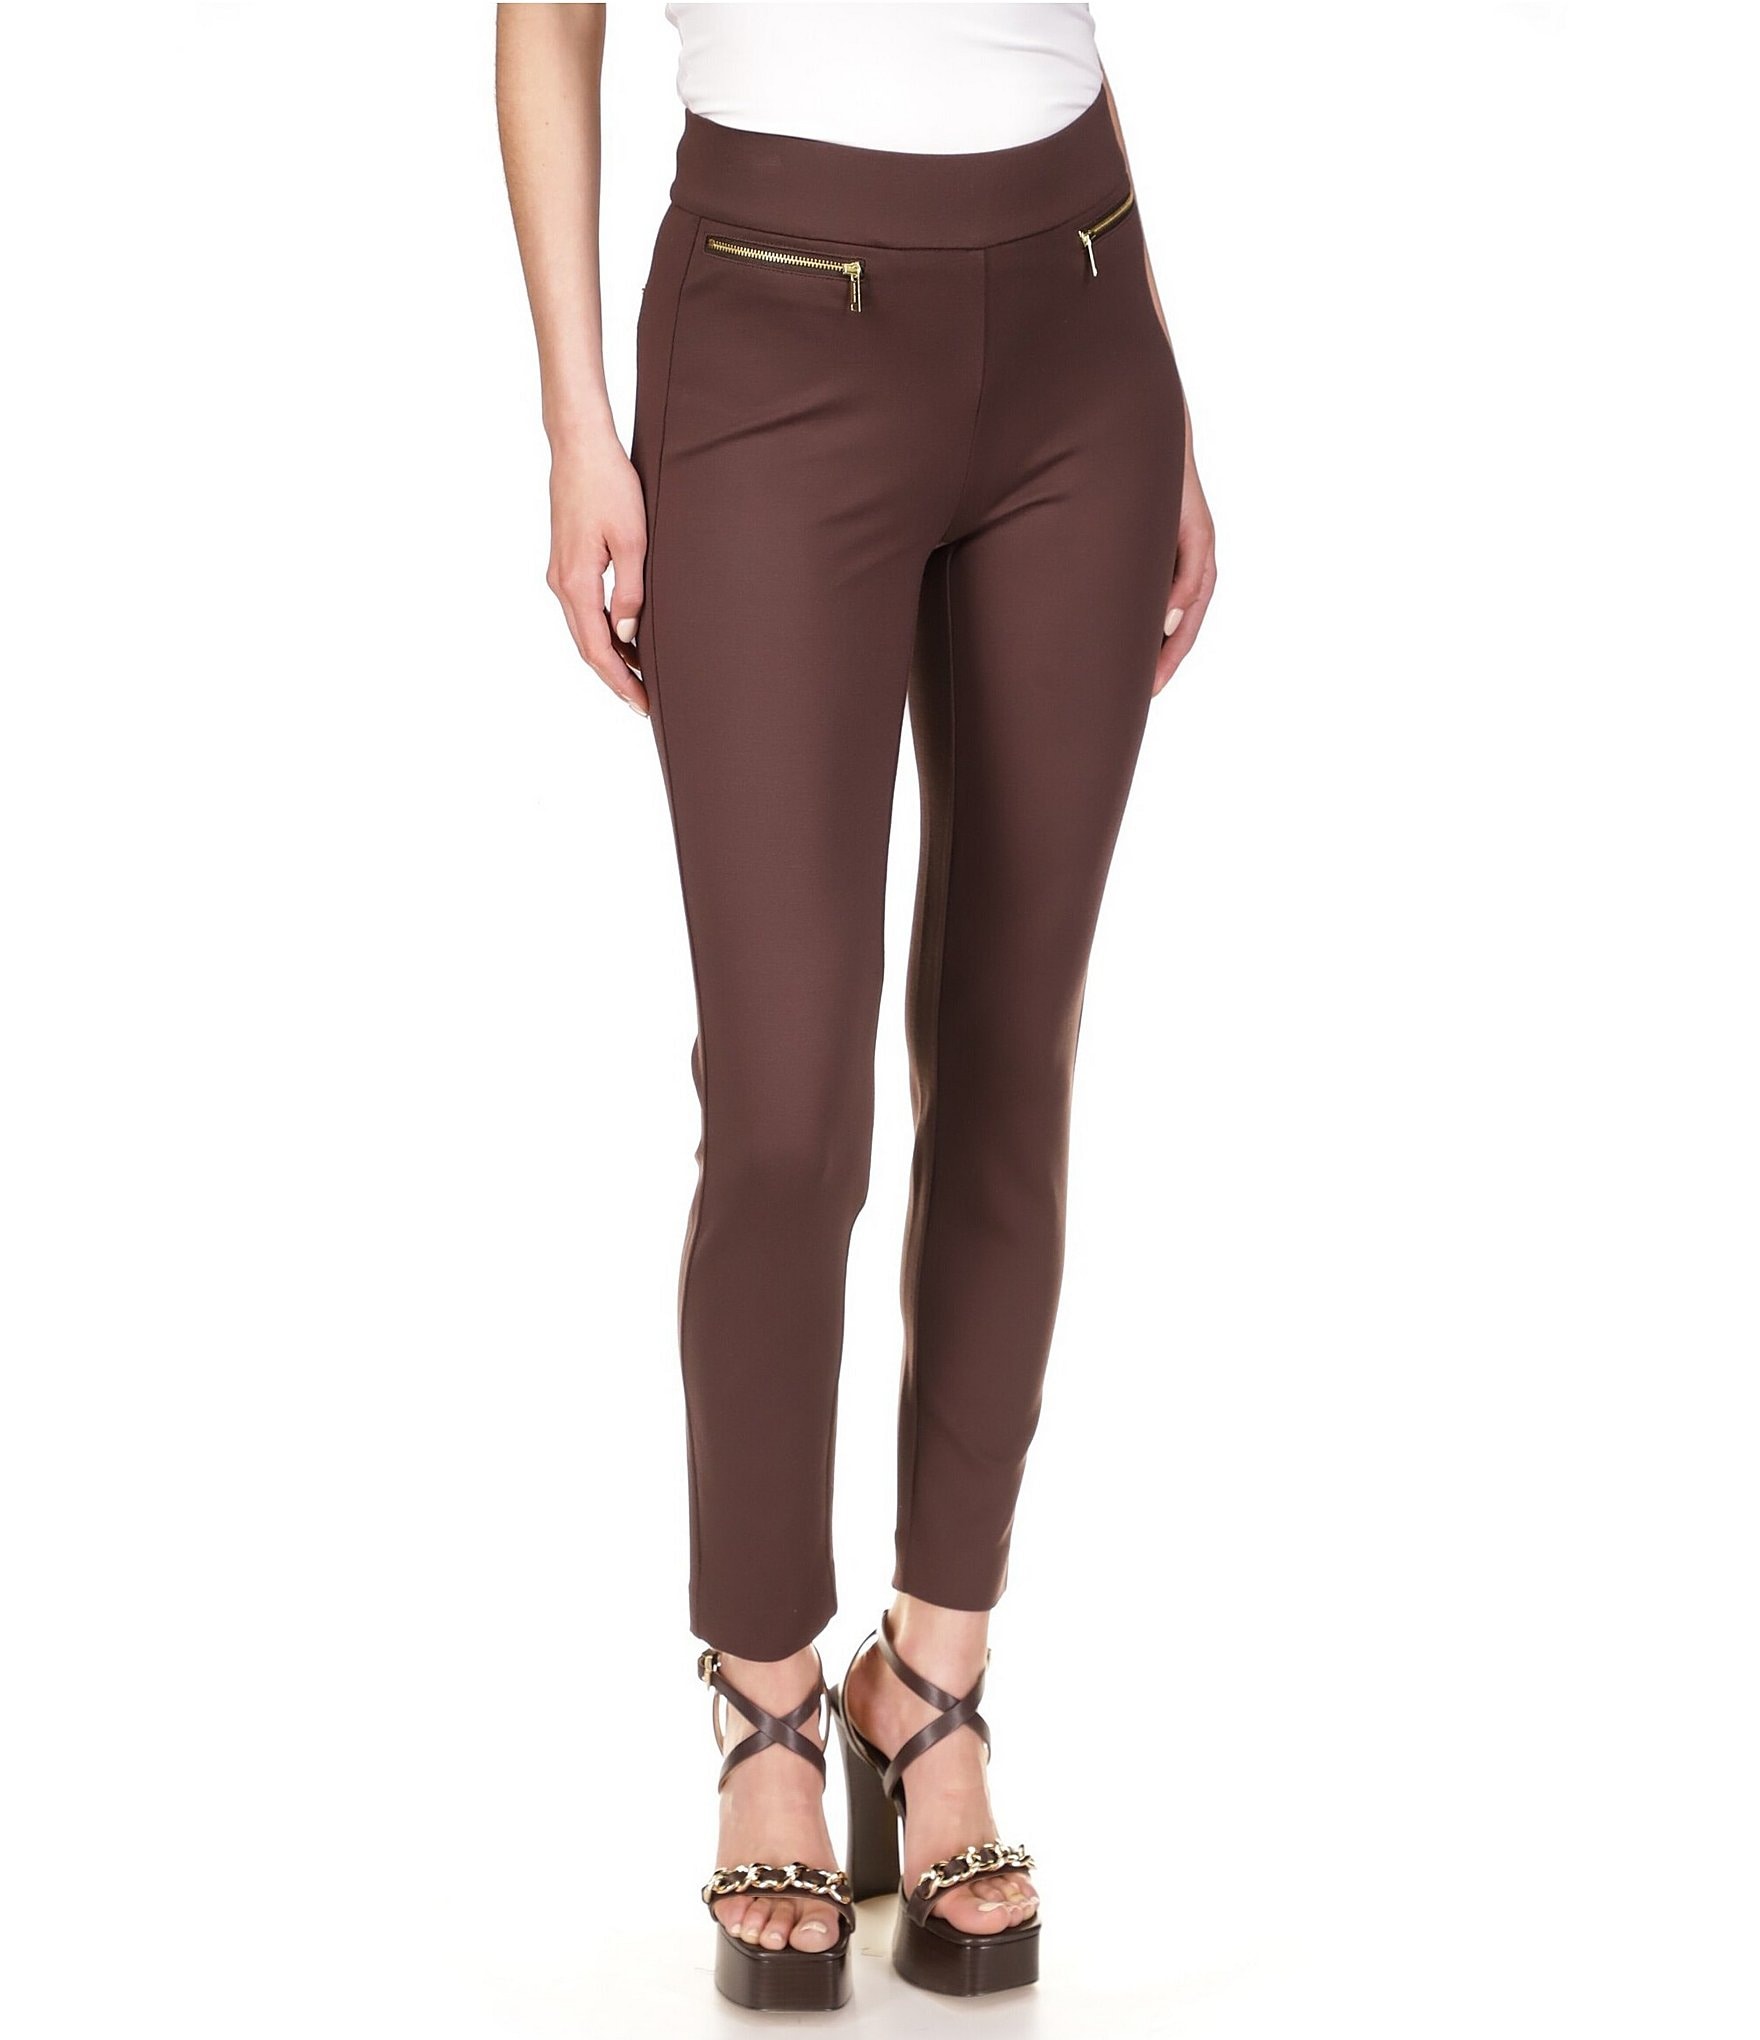 Michael Kors Pants Womens 6 Brown Skinny Gold Zippers Stretch Knit Comfort  City | eBay